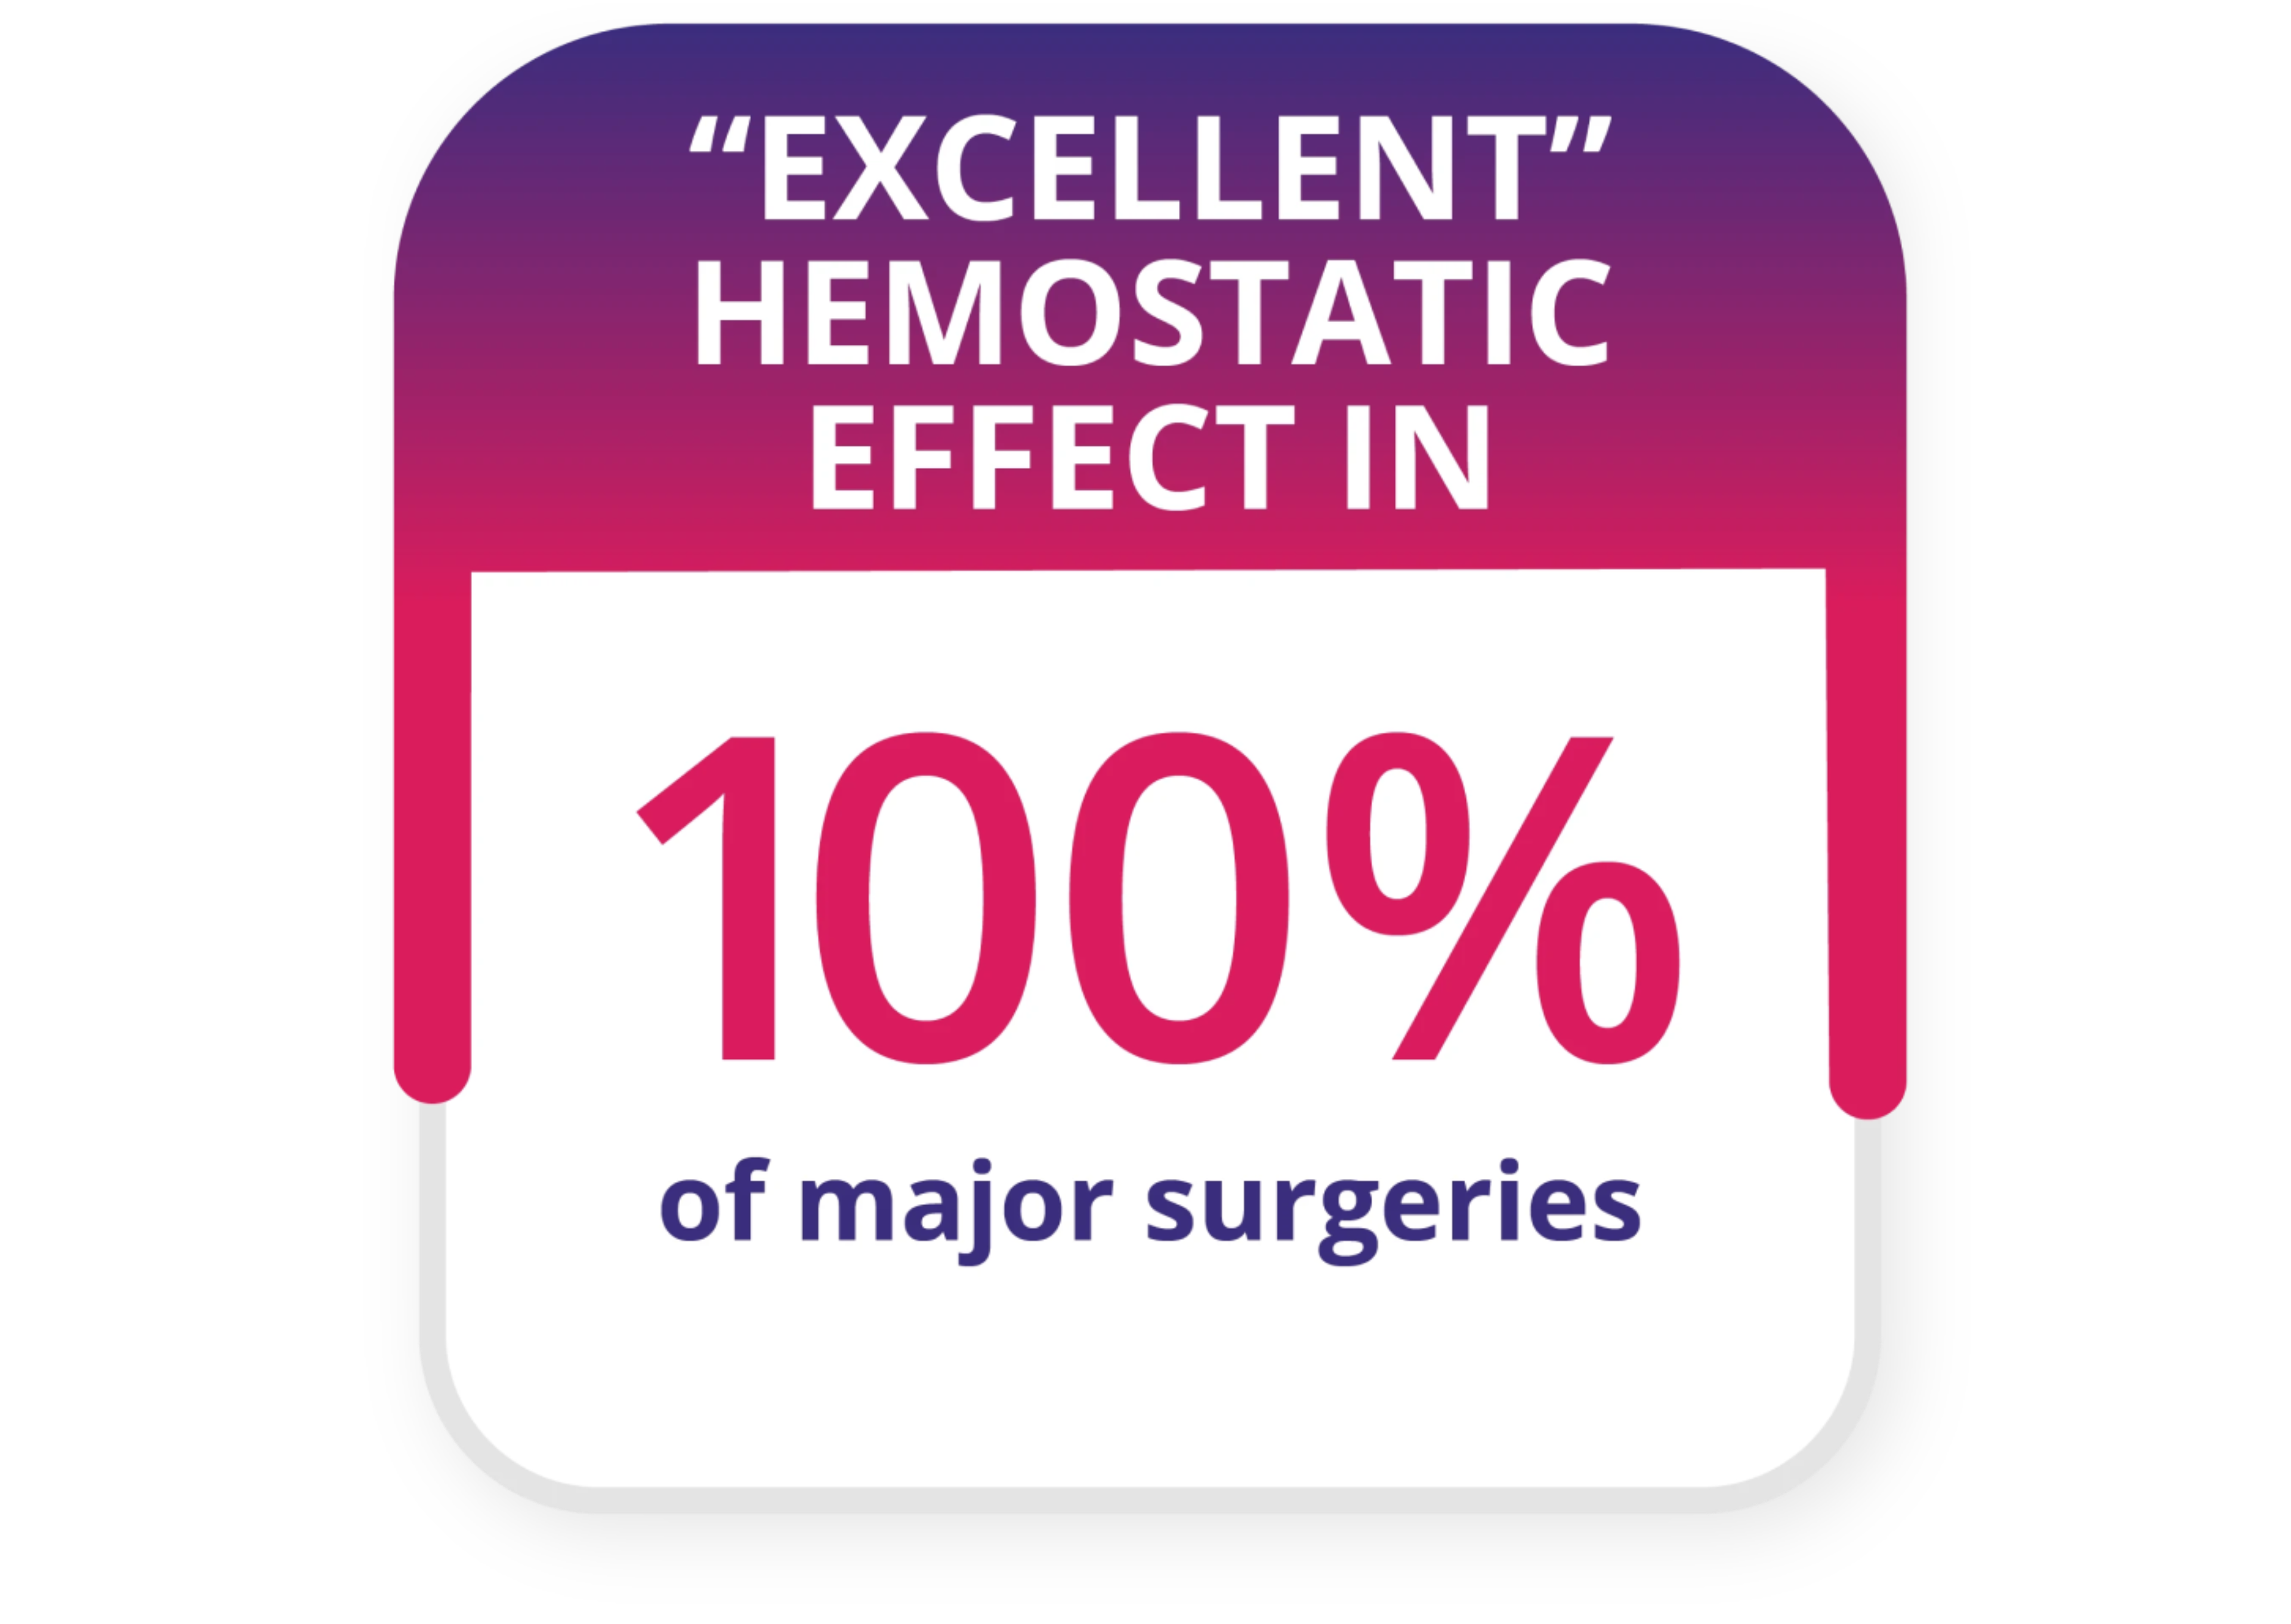 Excellent hemostatic effect in 100% of major surgeries